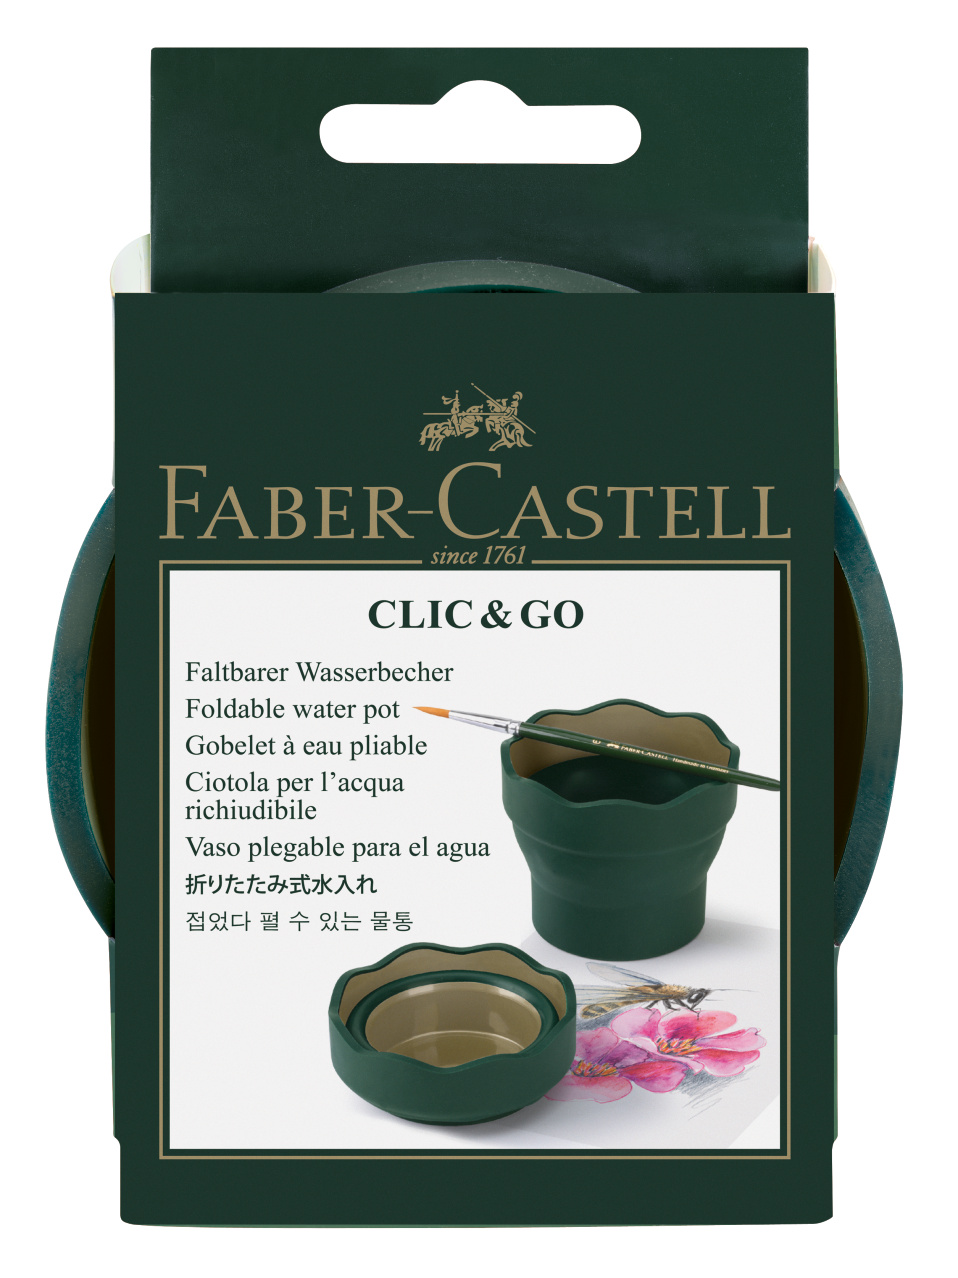 Faber-Castell Clic and Go Wasserbecher green